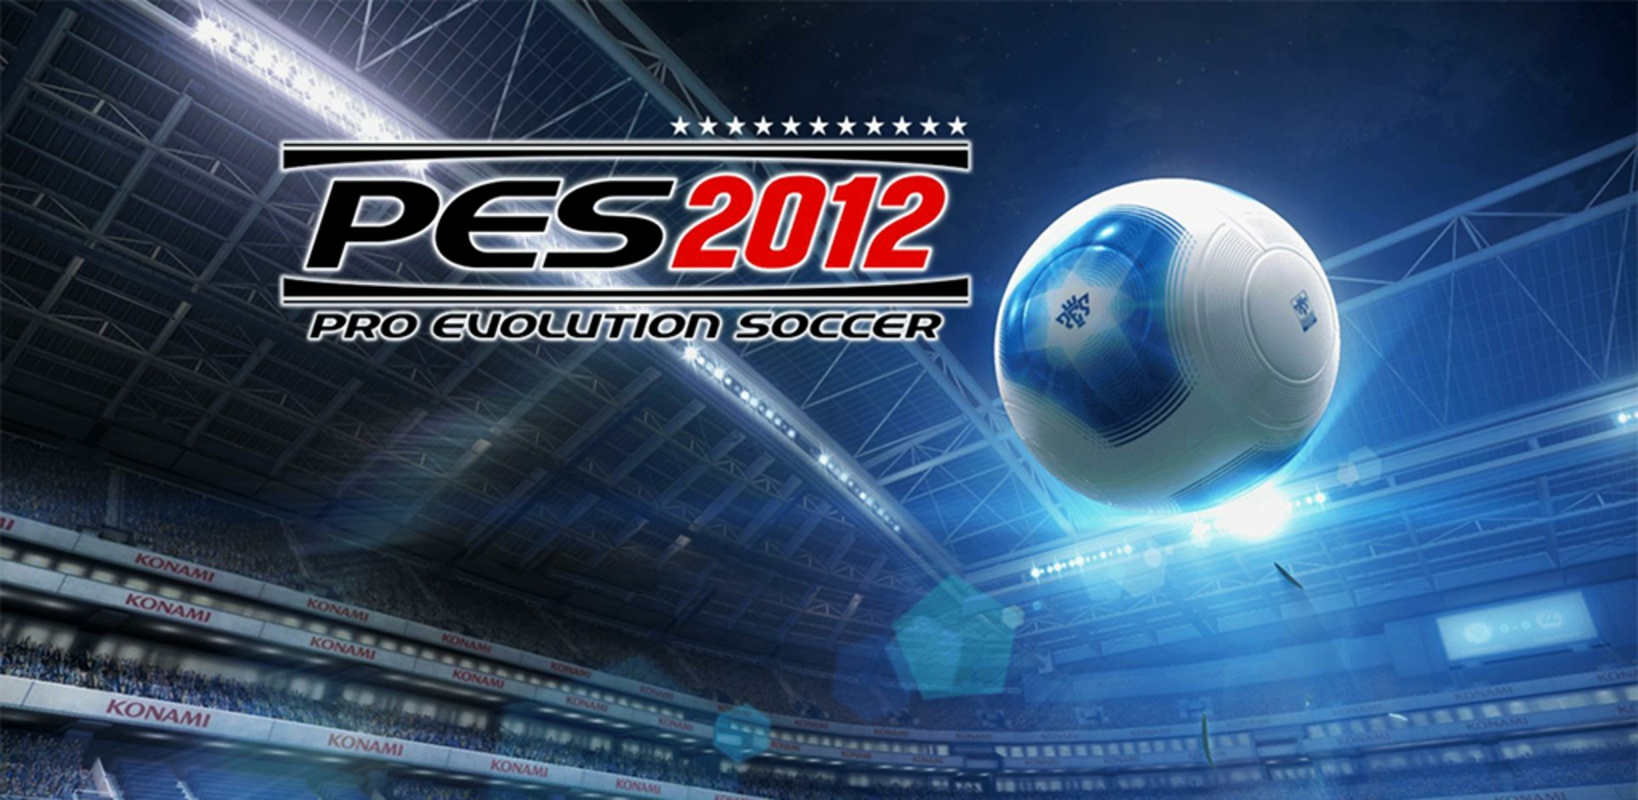 PES 2012 - Download